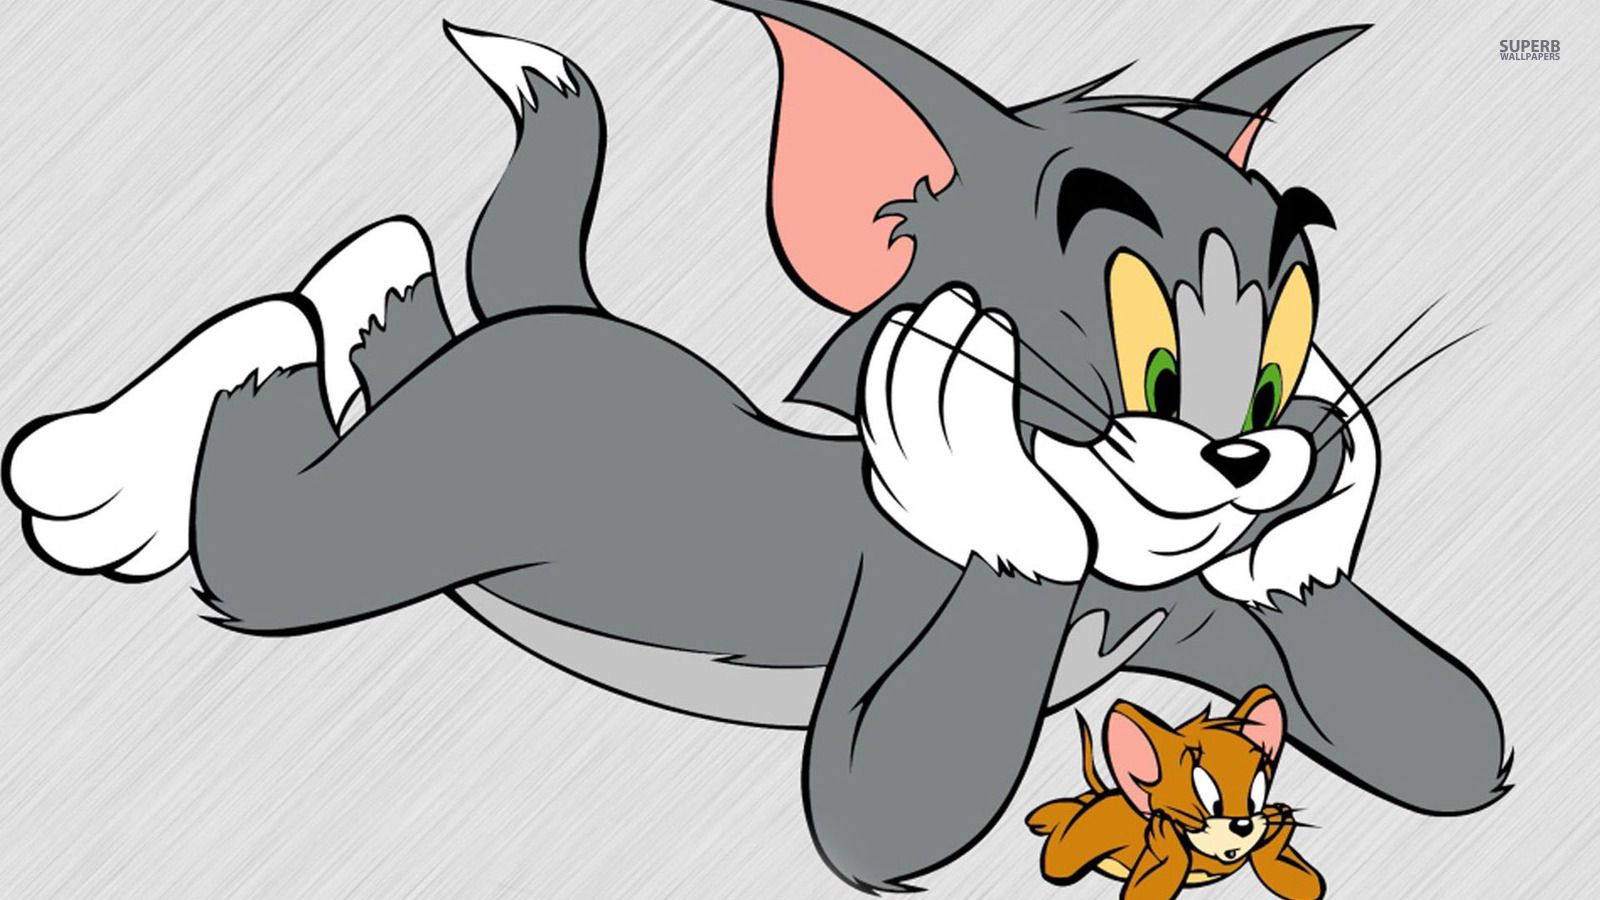 Tom and Jerry - Cartoons Wallpaper (38677682) - Fanpop